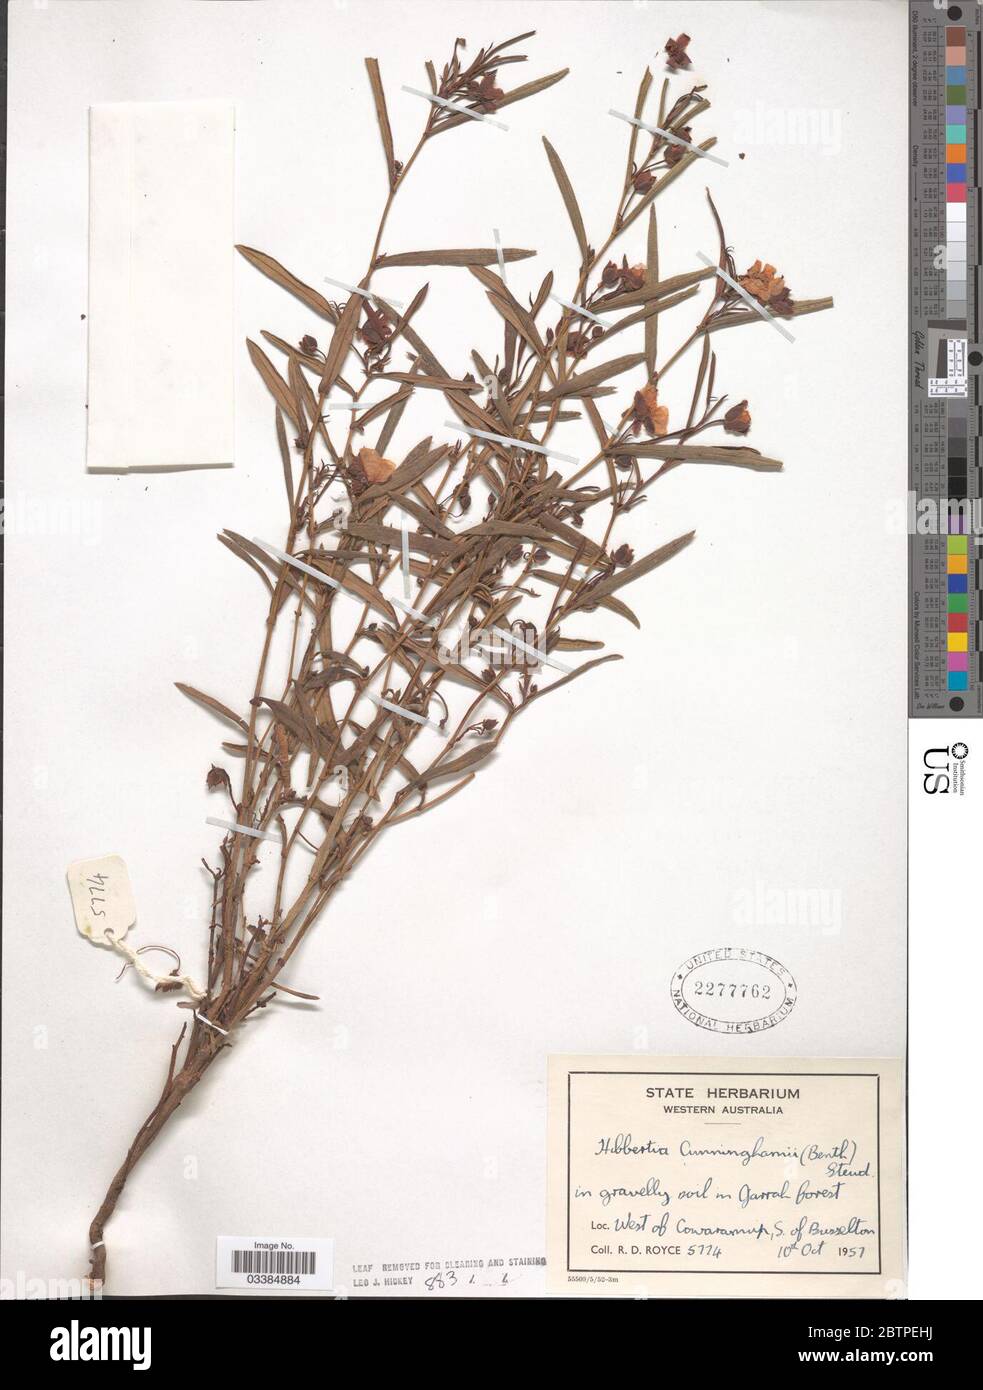 Hibbertia cunninghamii Aiton ex Hook. Stock Photo